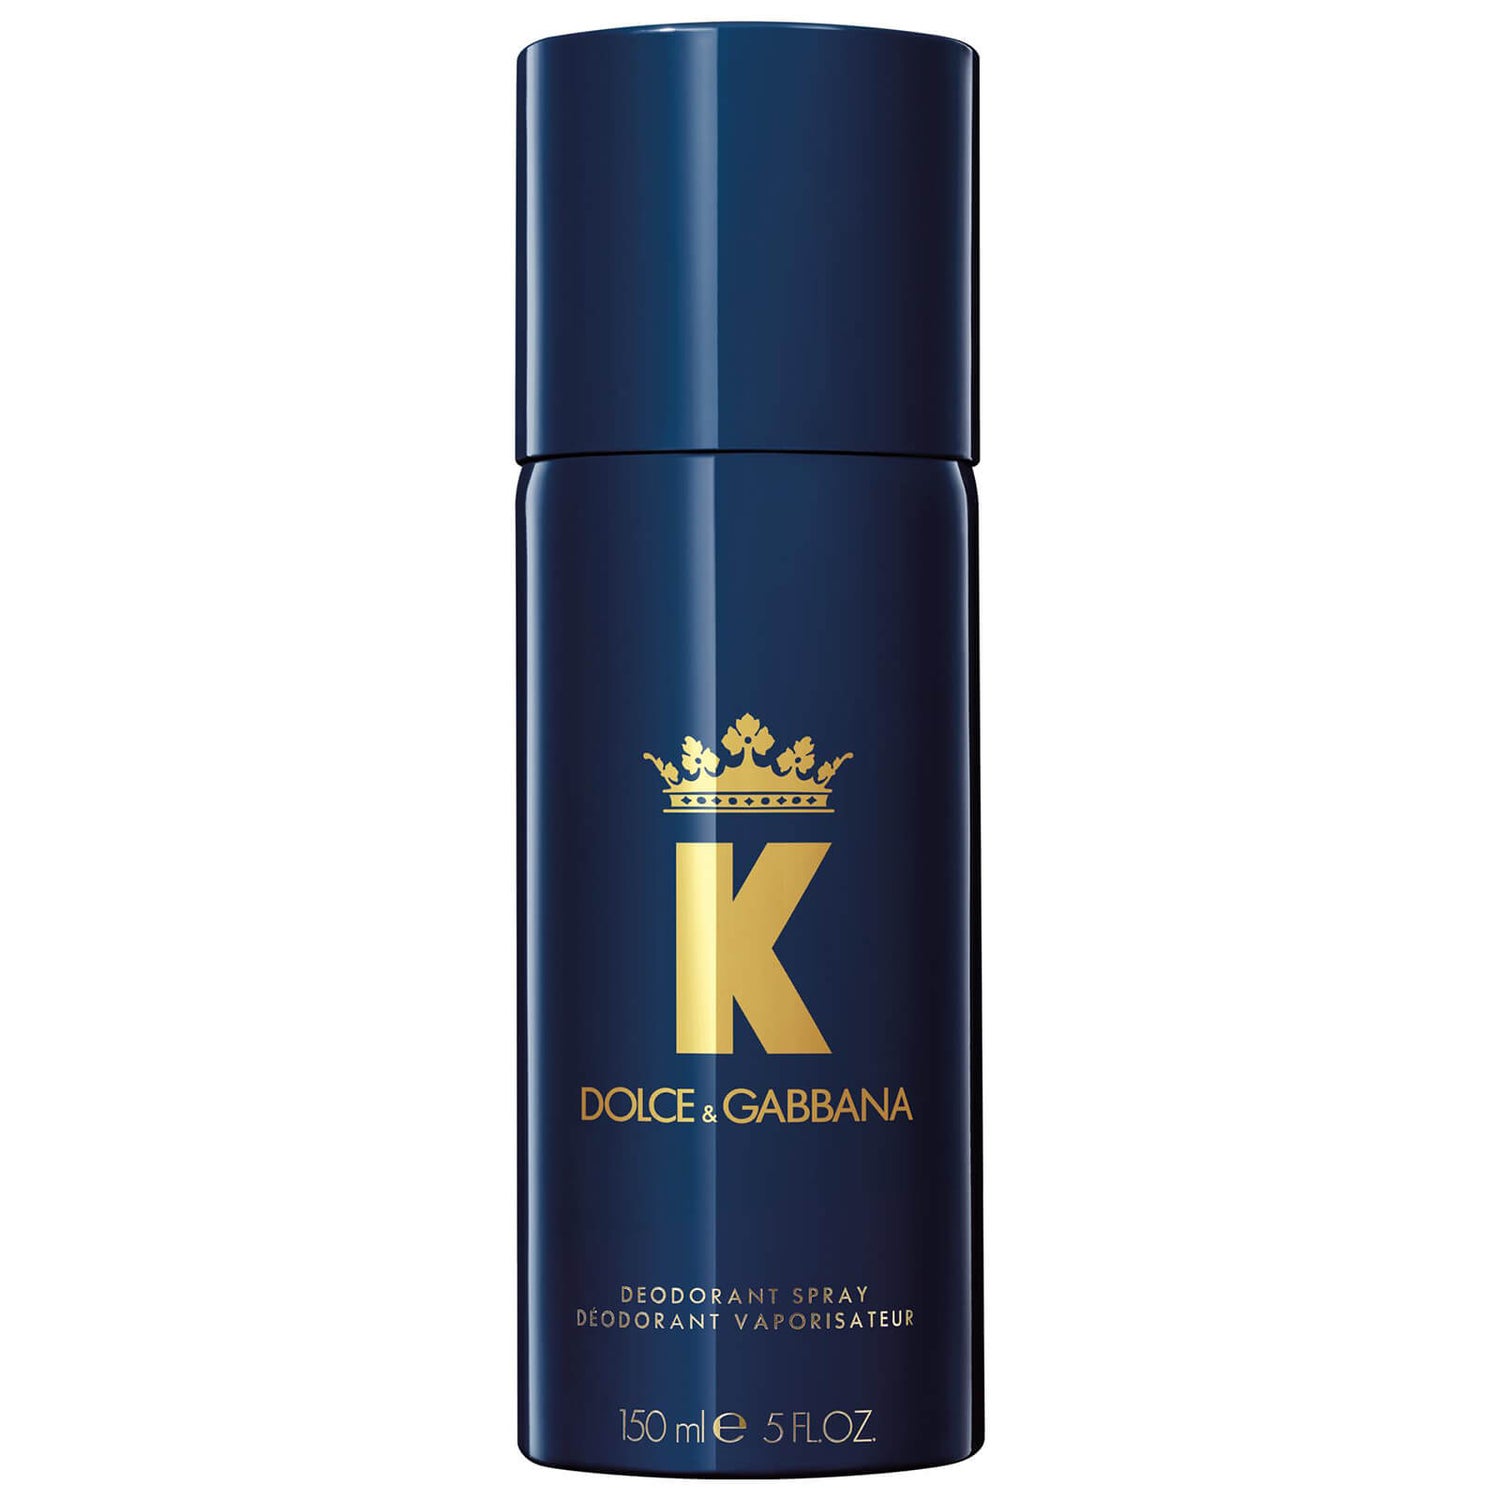 K by dolce gabbana. K by Dolce & Gabbana deo-Spray (150 мл). Дезодорант мужской Dolce Gabbana k. Дезодорант Dolce Gabbana мужской. D&amp;g k men 150ml deo Spray.